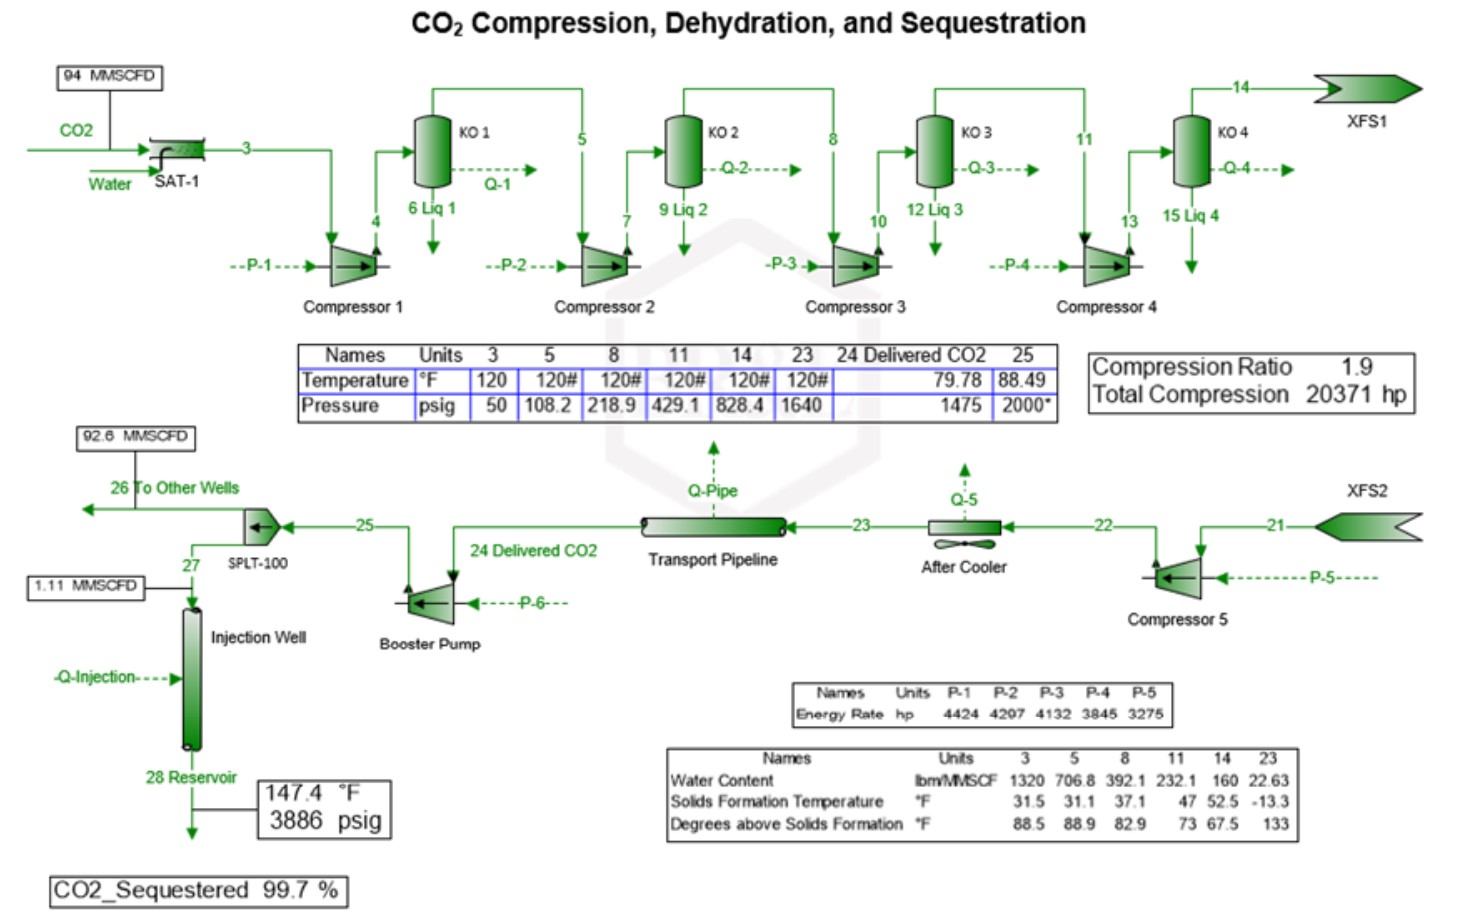 ProMax CO2 Compression Dehydration Sequestration